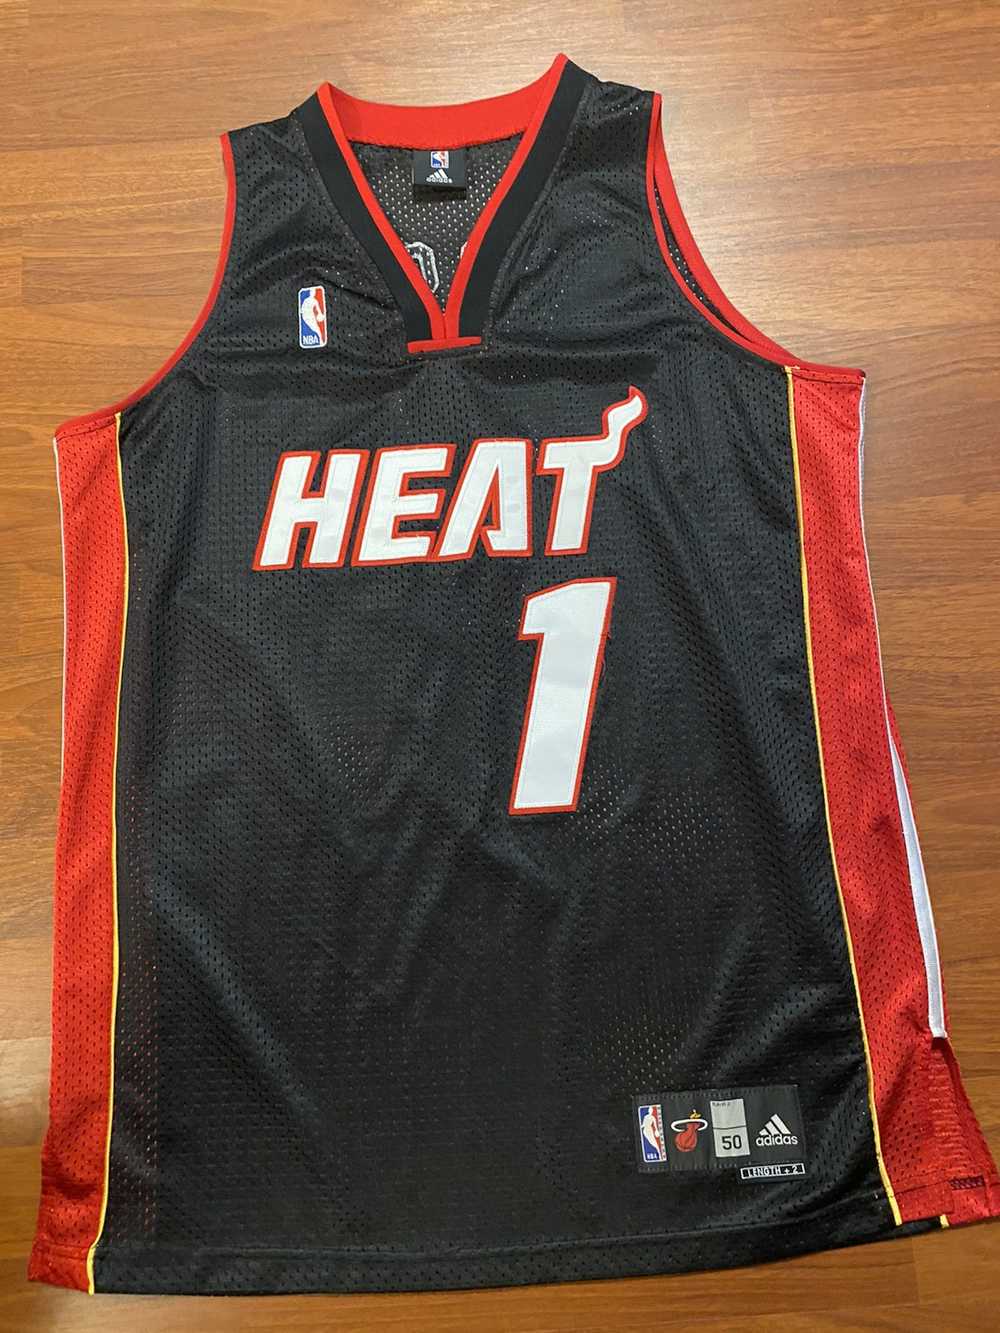 Adidas Miami Heat Dwayne Wade NBA Finals jersey Limited Edition